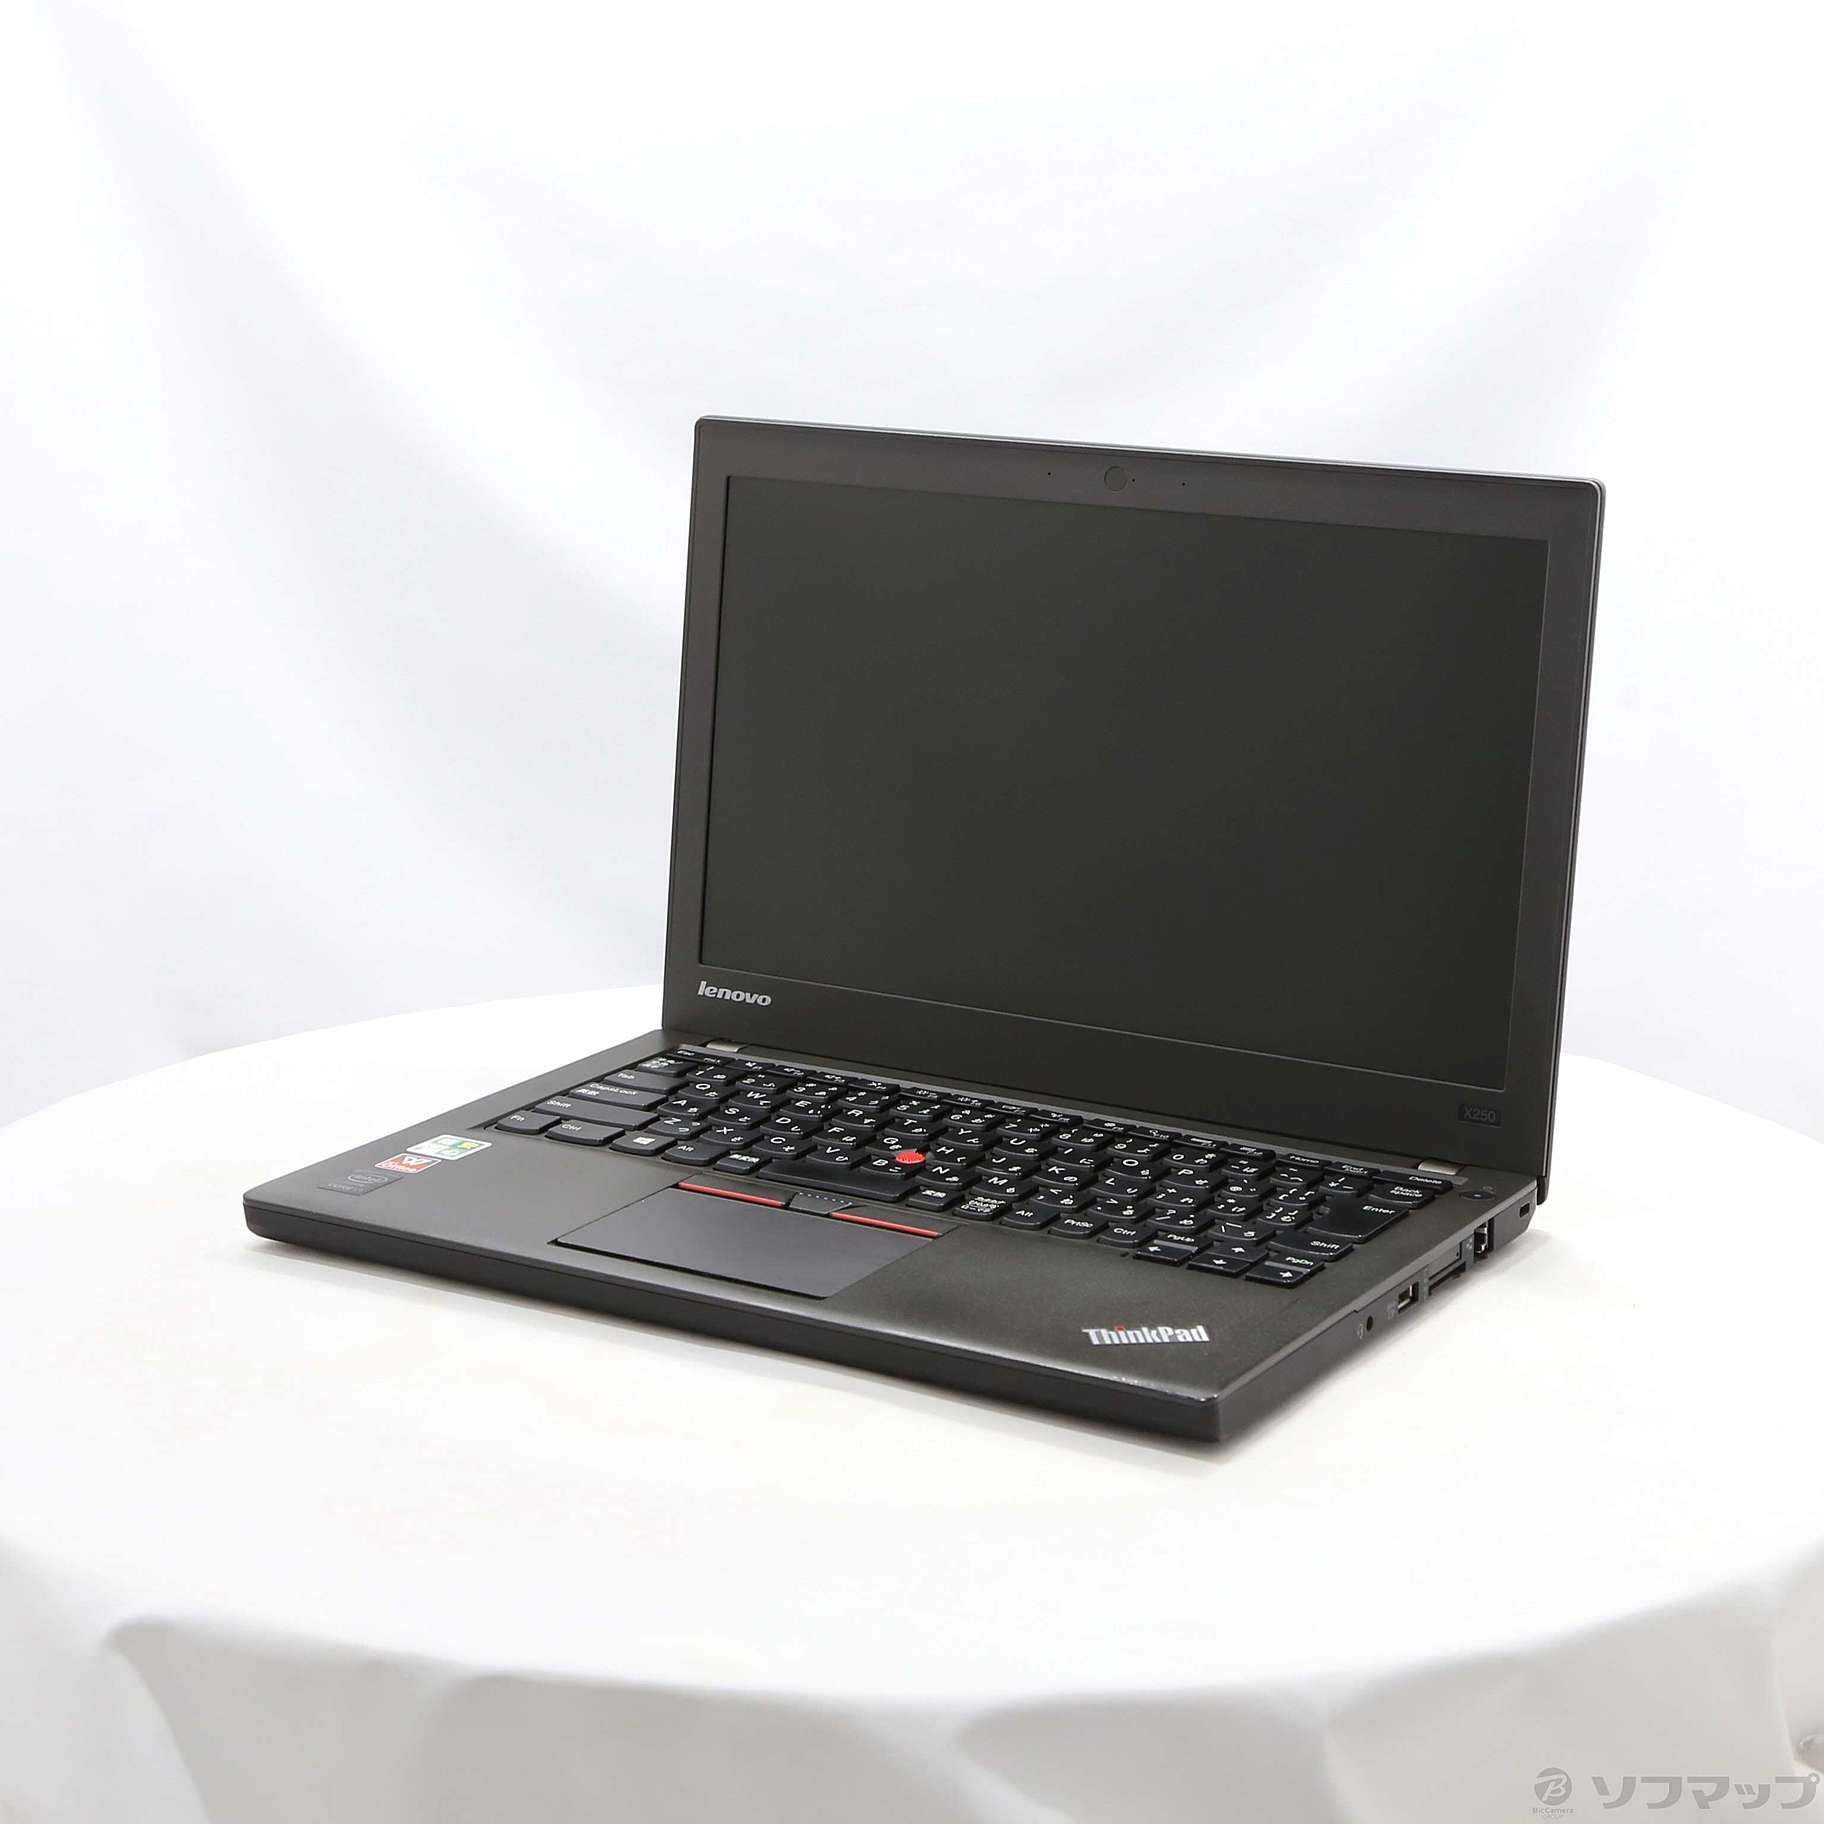 Lenovo ThikPad X250